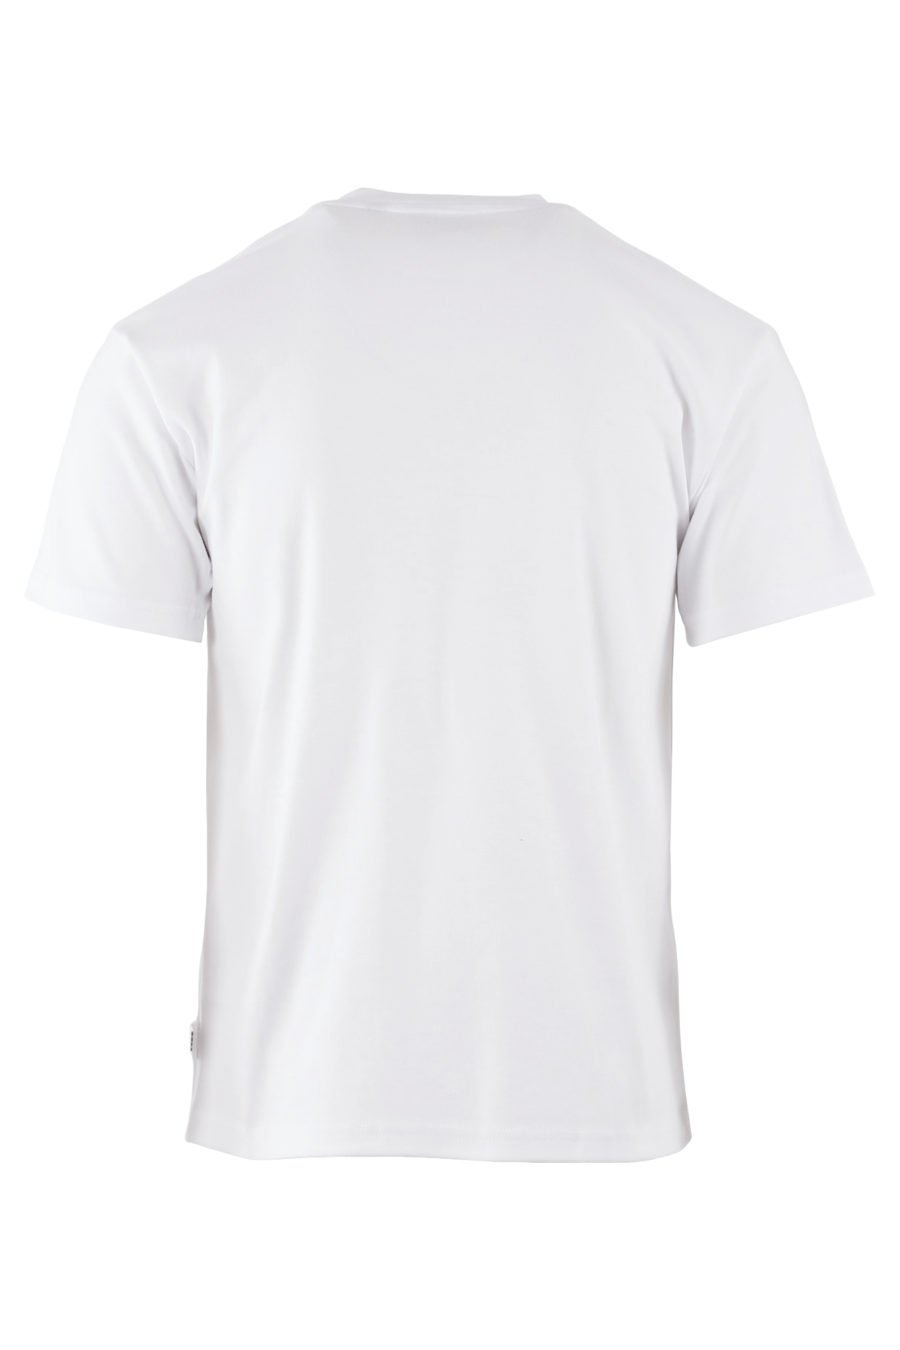 Camiseta blanca con logo pequeño negro - IMG 7662